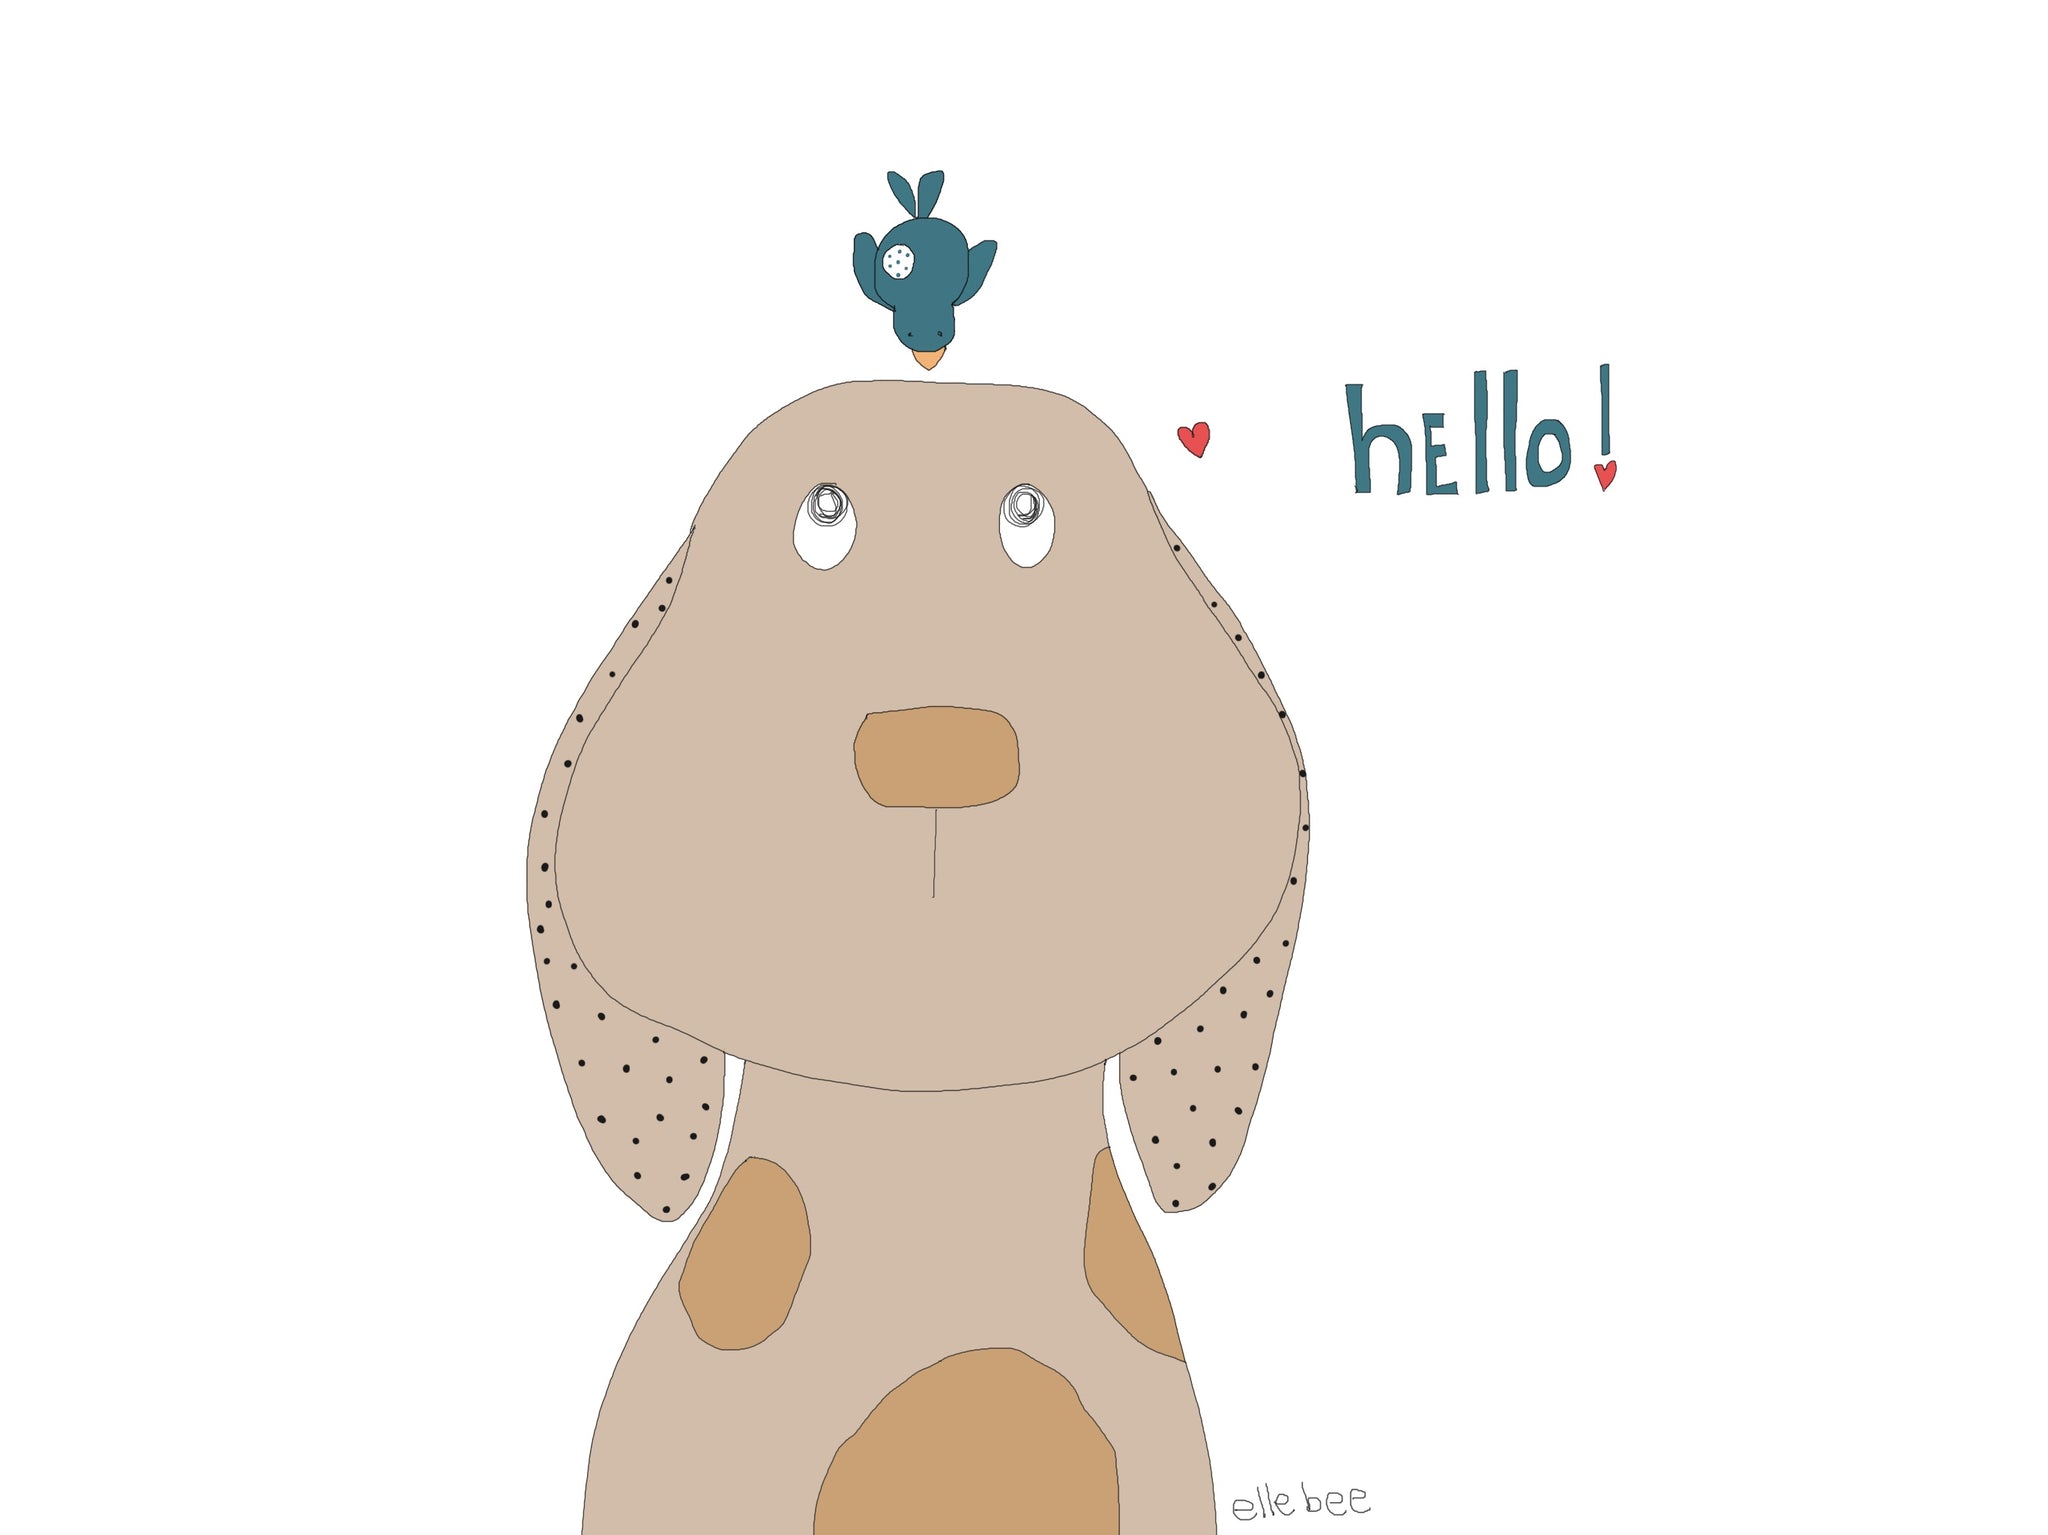 Greeting card “Hello”